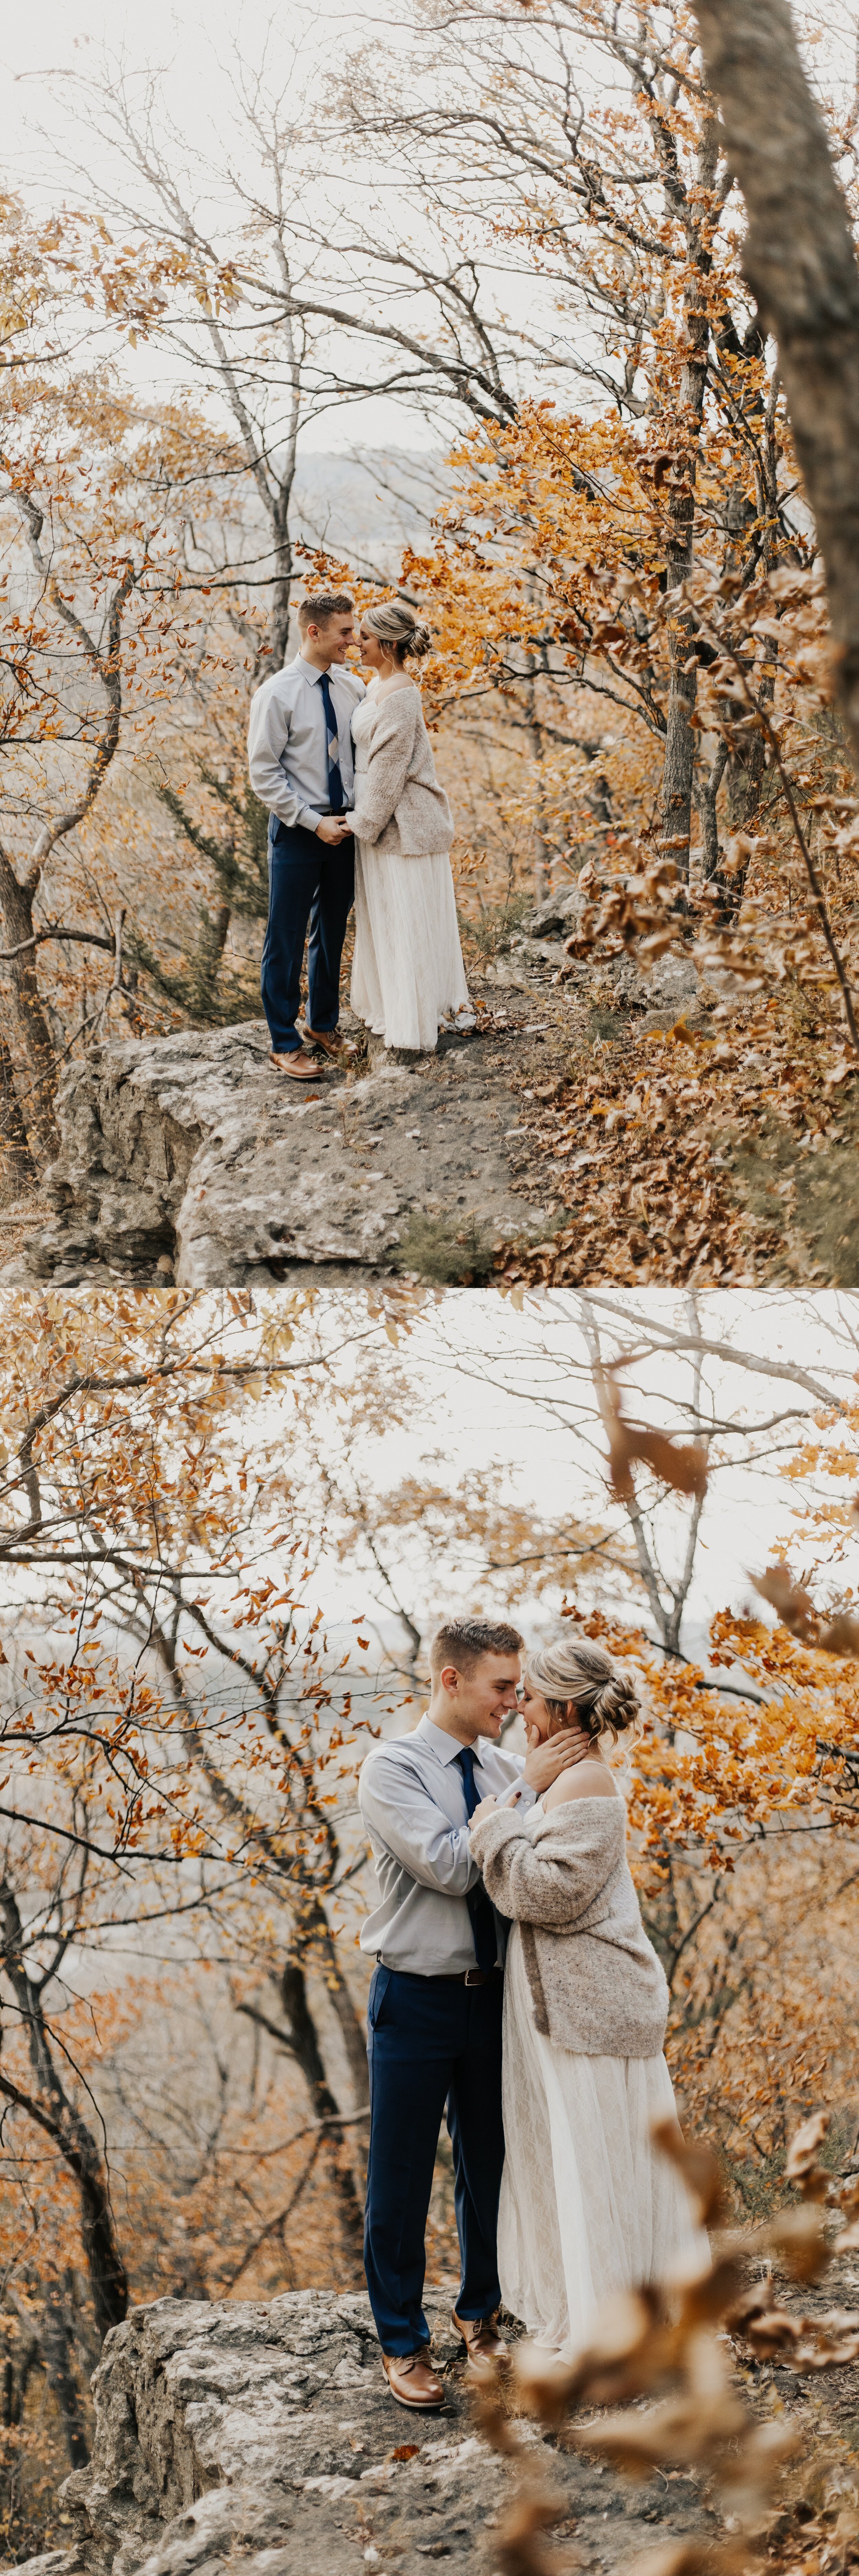 jessika-christine-photography-elopement-kansas+city-seattle+elopement-san+diego+elopement-yosemite-couples-outdoor-adventure-session (3).jpg